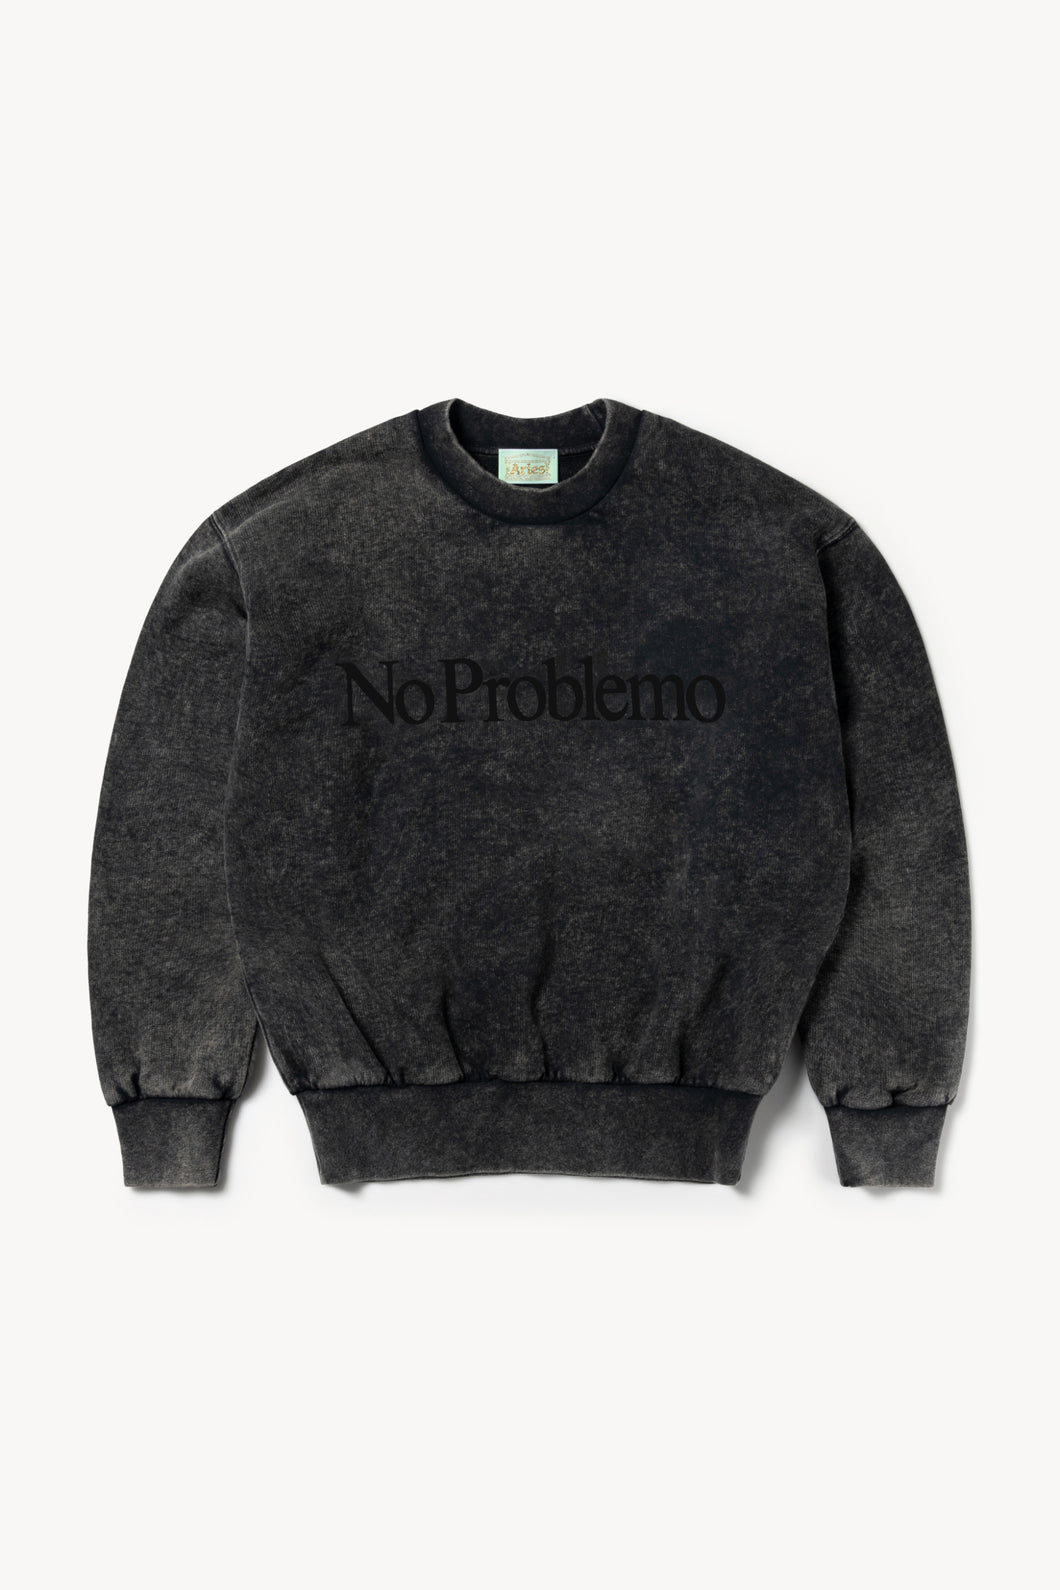 Acid No Problemo Sweatshirt Black – Aries